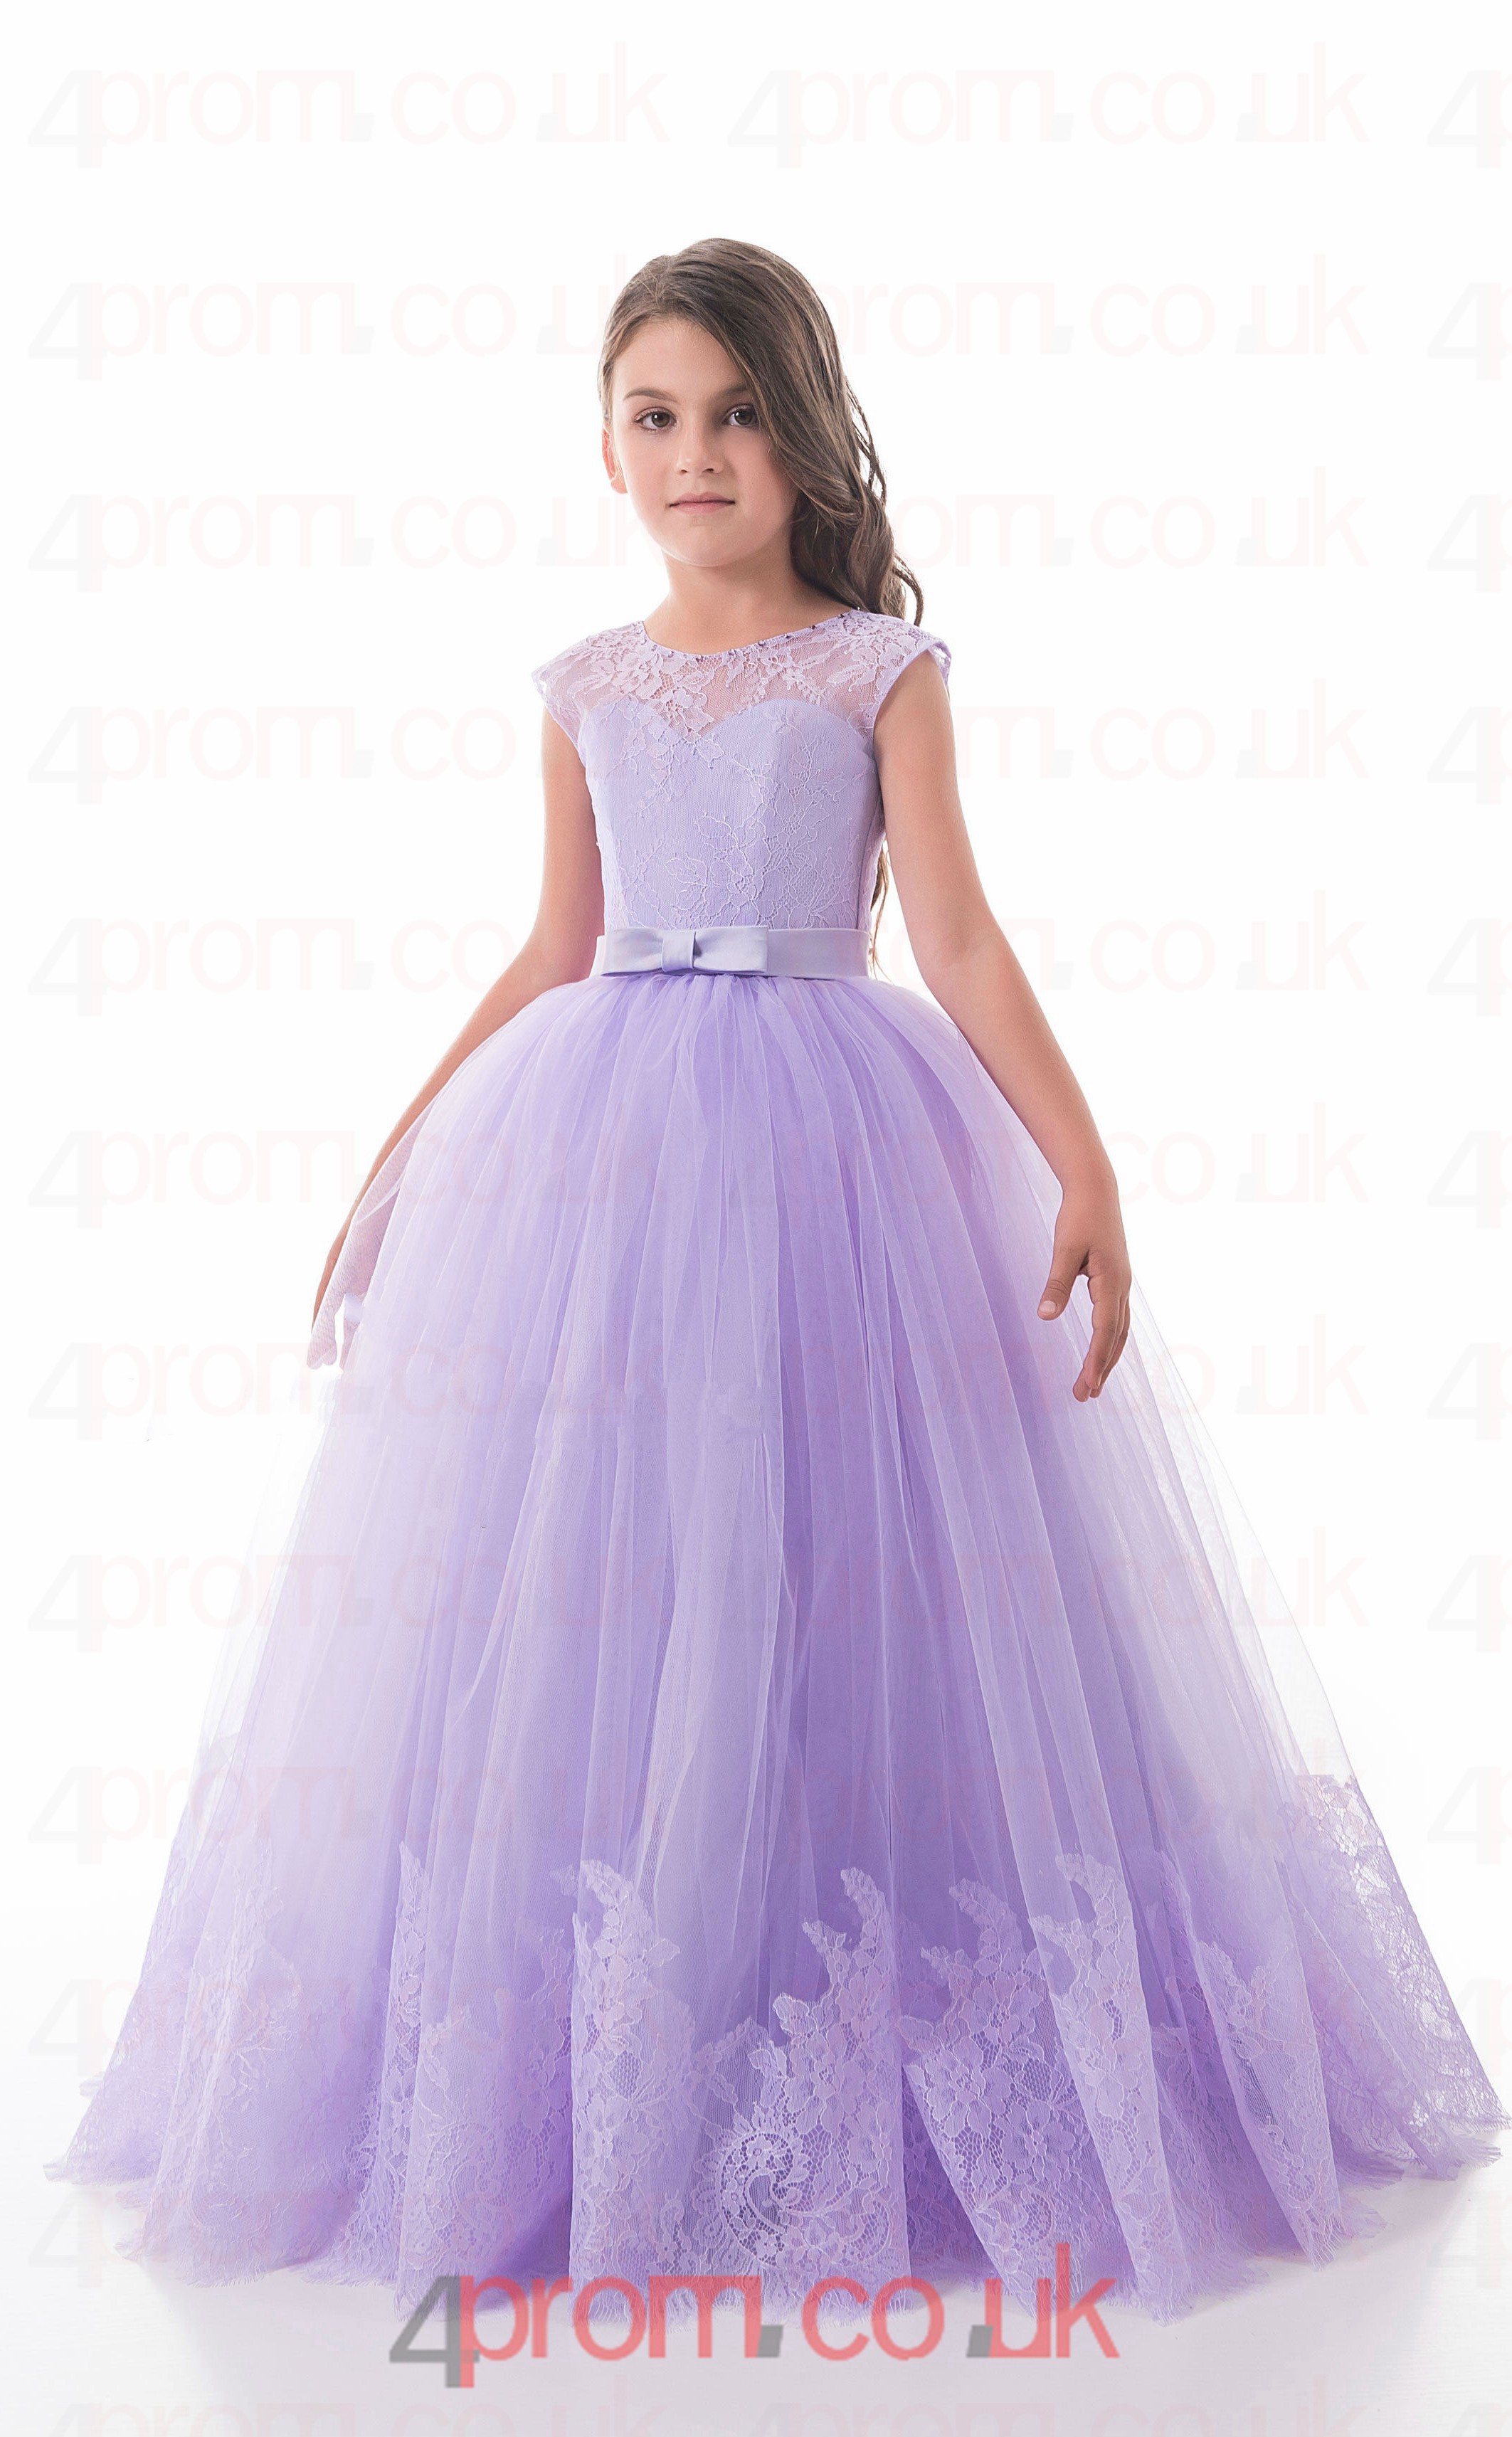 Illusion Sleeveless Light Blue Kids Prom Dresses CHK012 - 4prom.co.uk